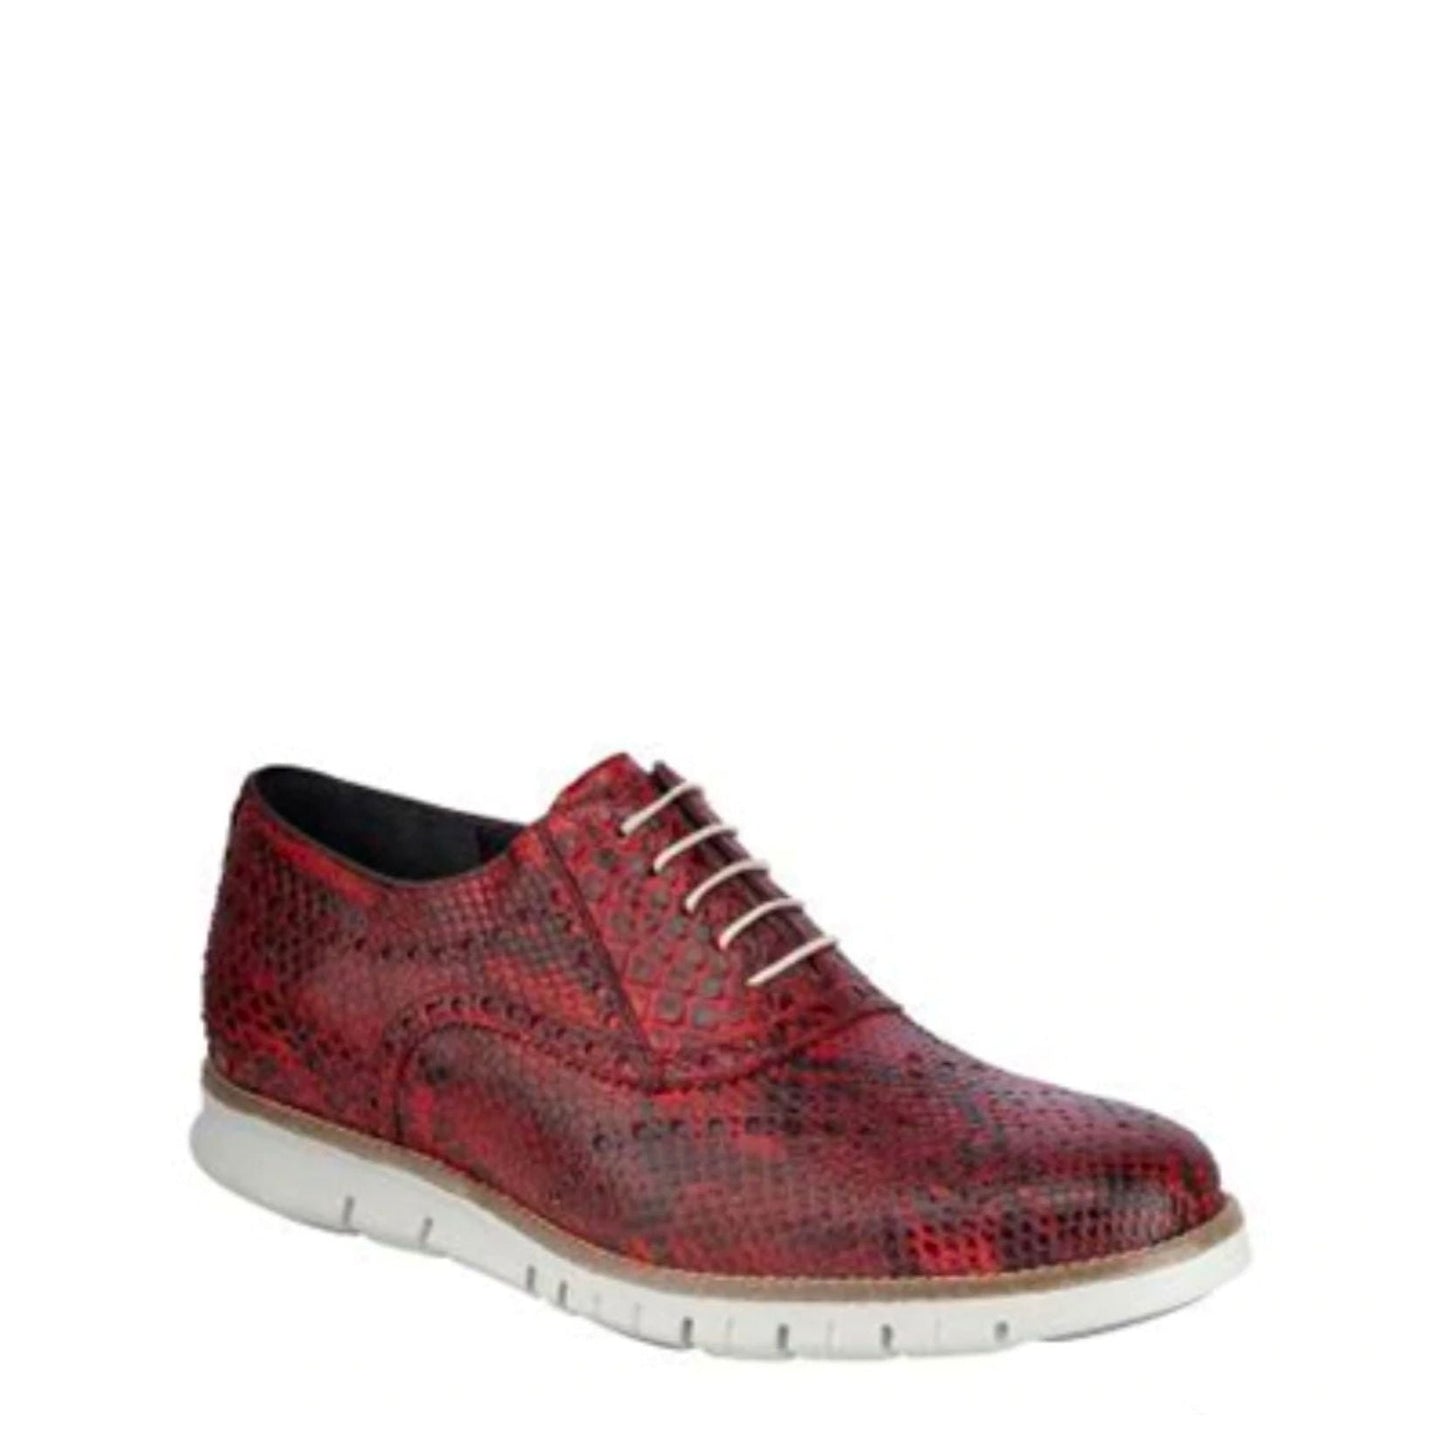 21WPBPB - Cuadra red casual fashion python oxford sneakers for men-FRANCO CUADRA-Kuet-Cuadra-Boots